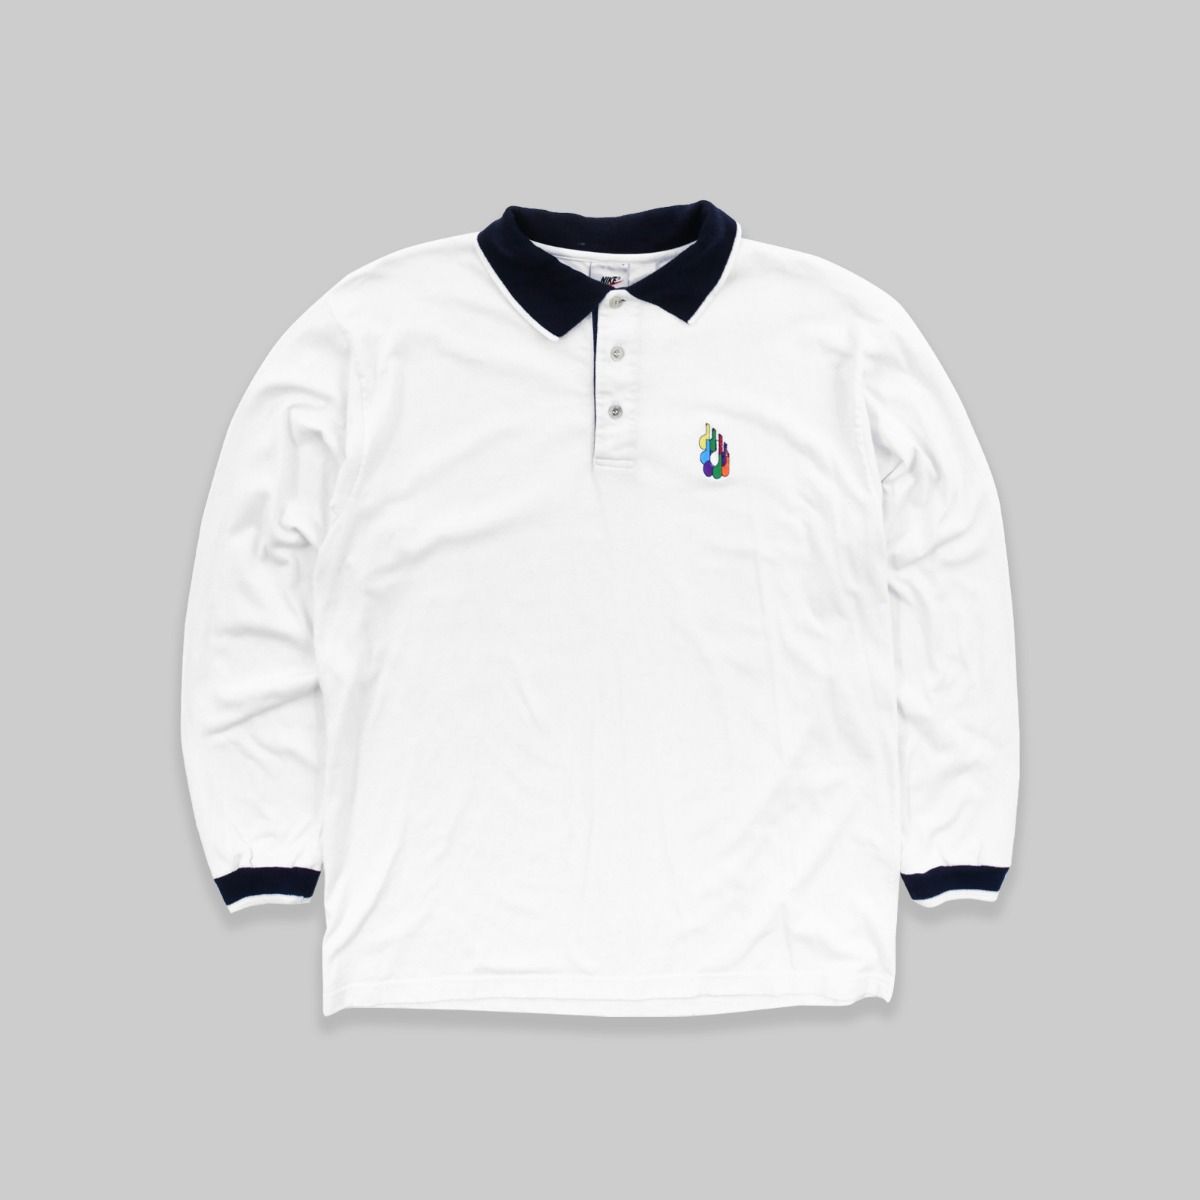 Nike 1990s Long Sleeve Polo shirt